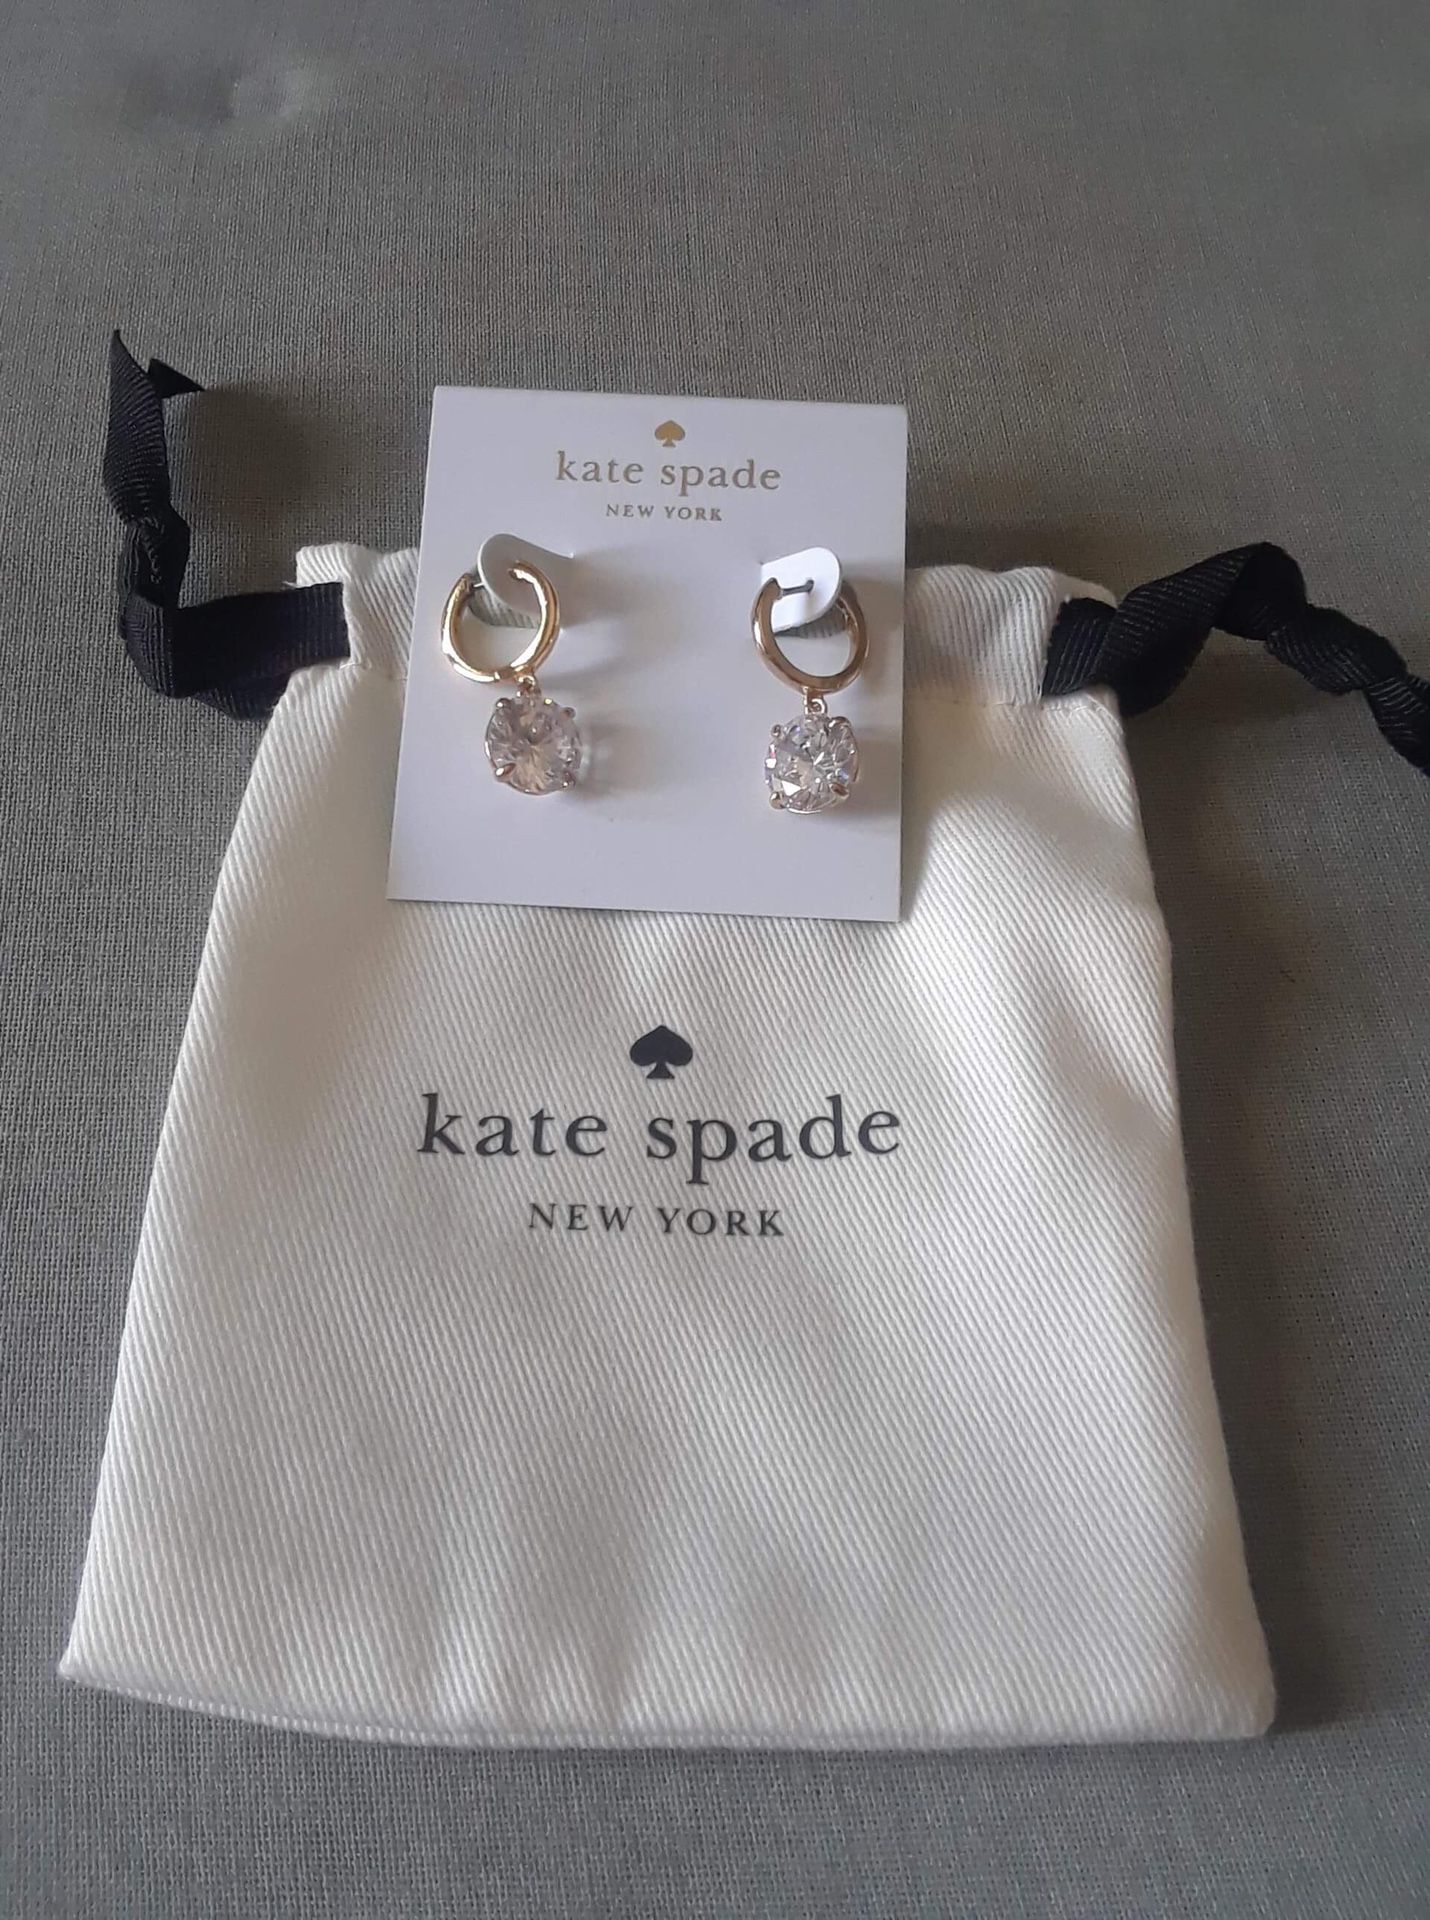 Kate spade Authentic earrings